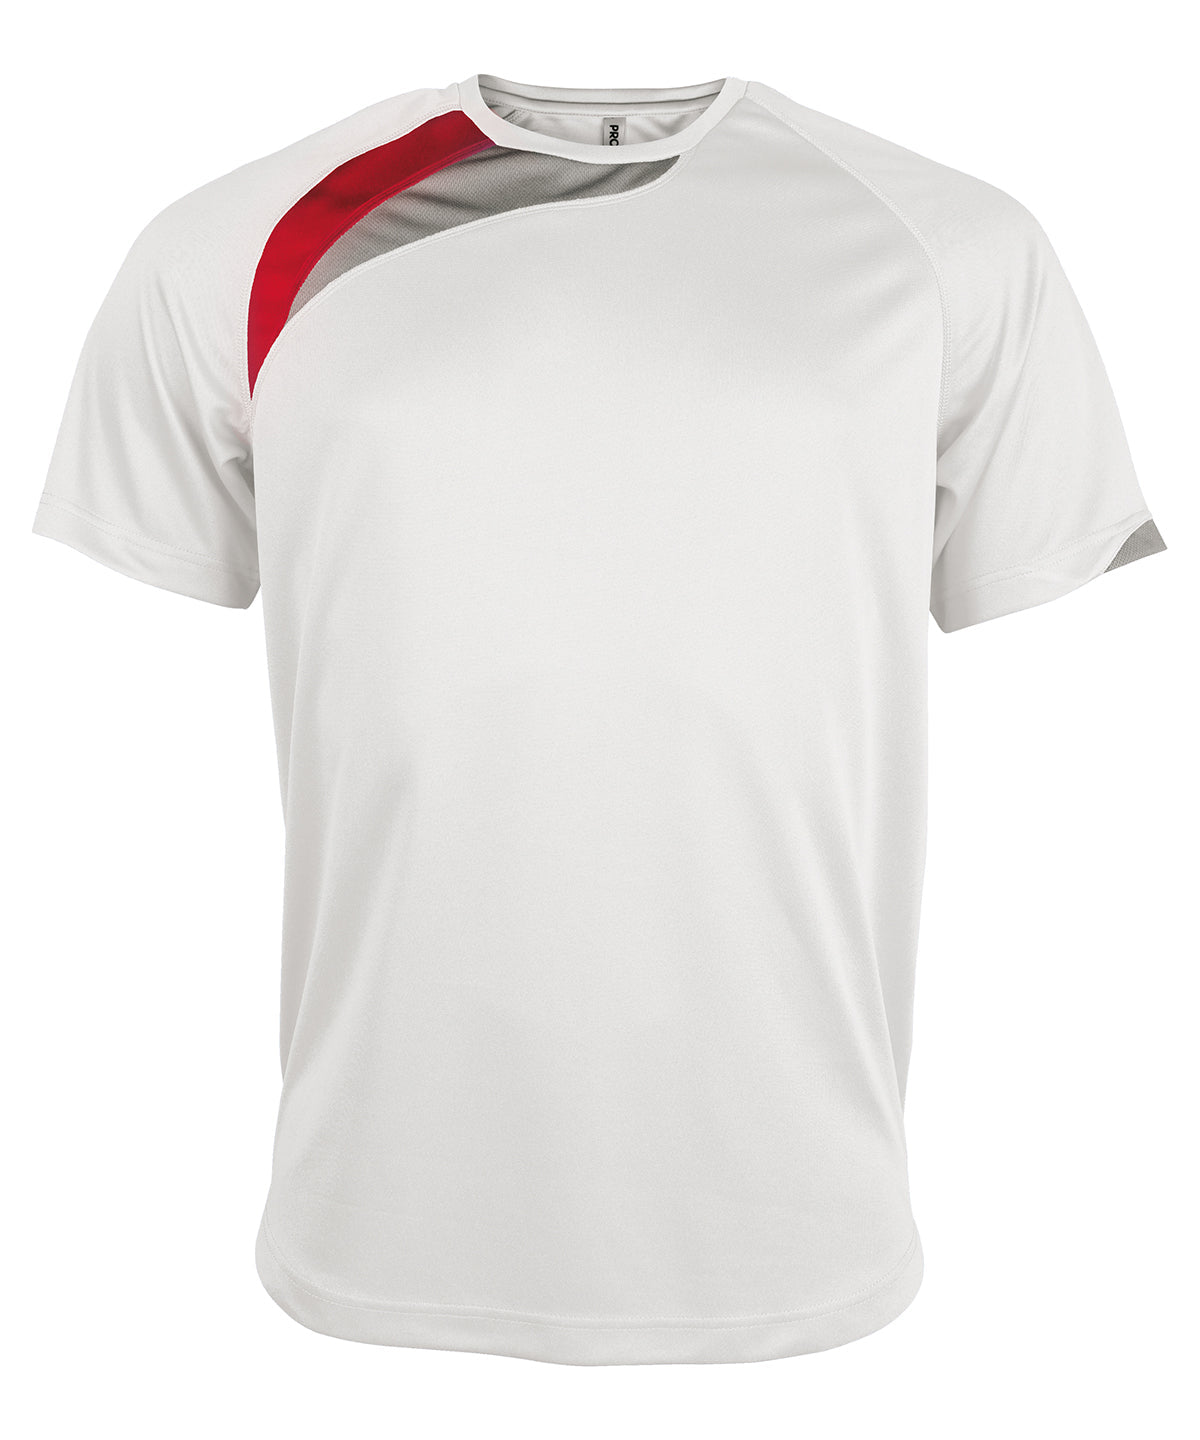 Kariban short-sleeved jersey PA436 - COOZO